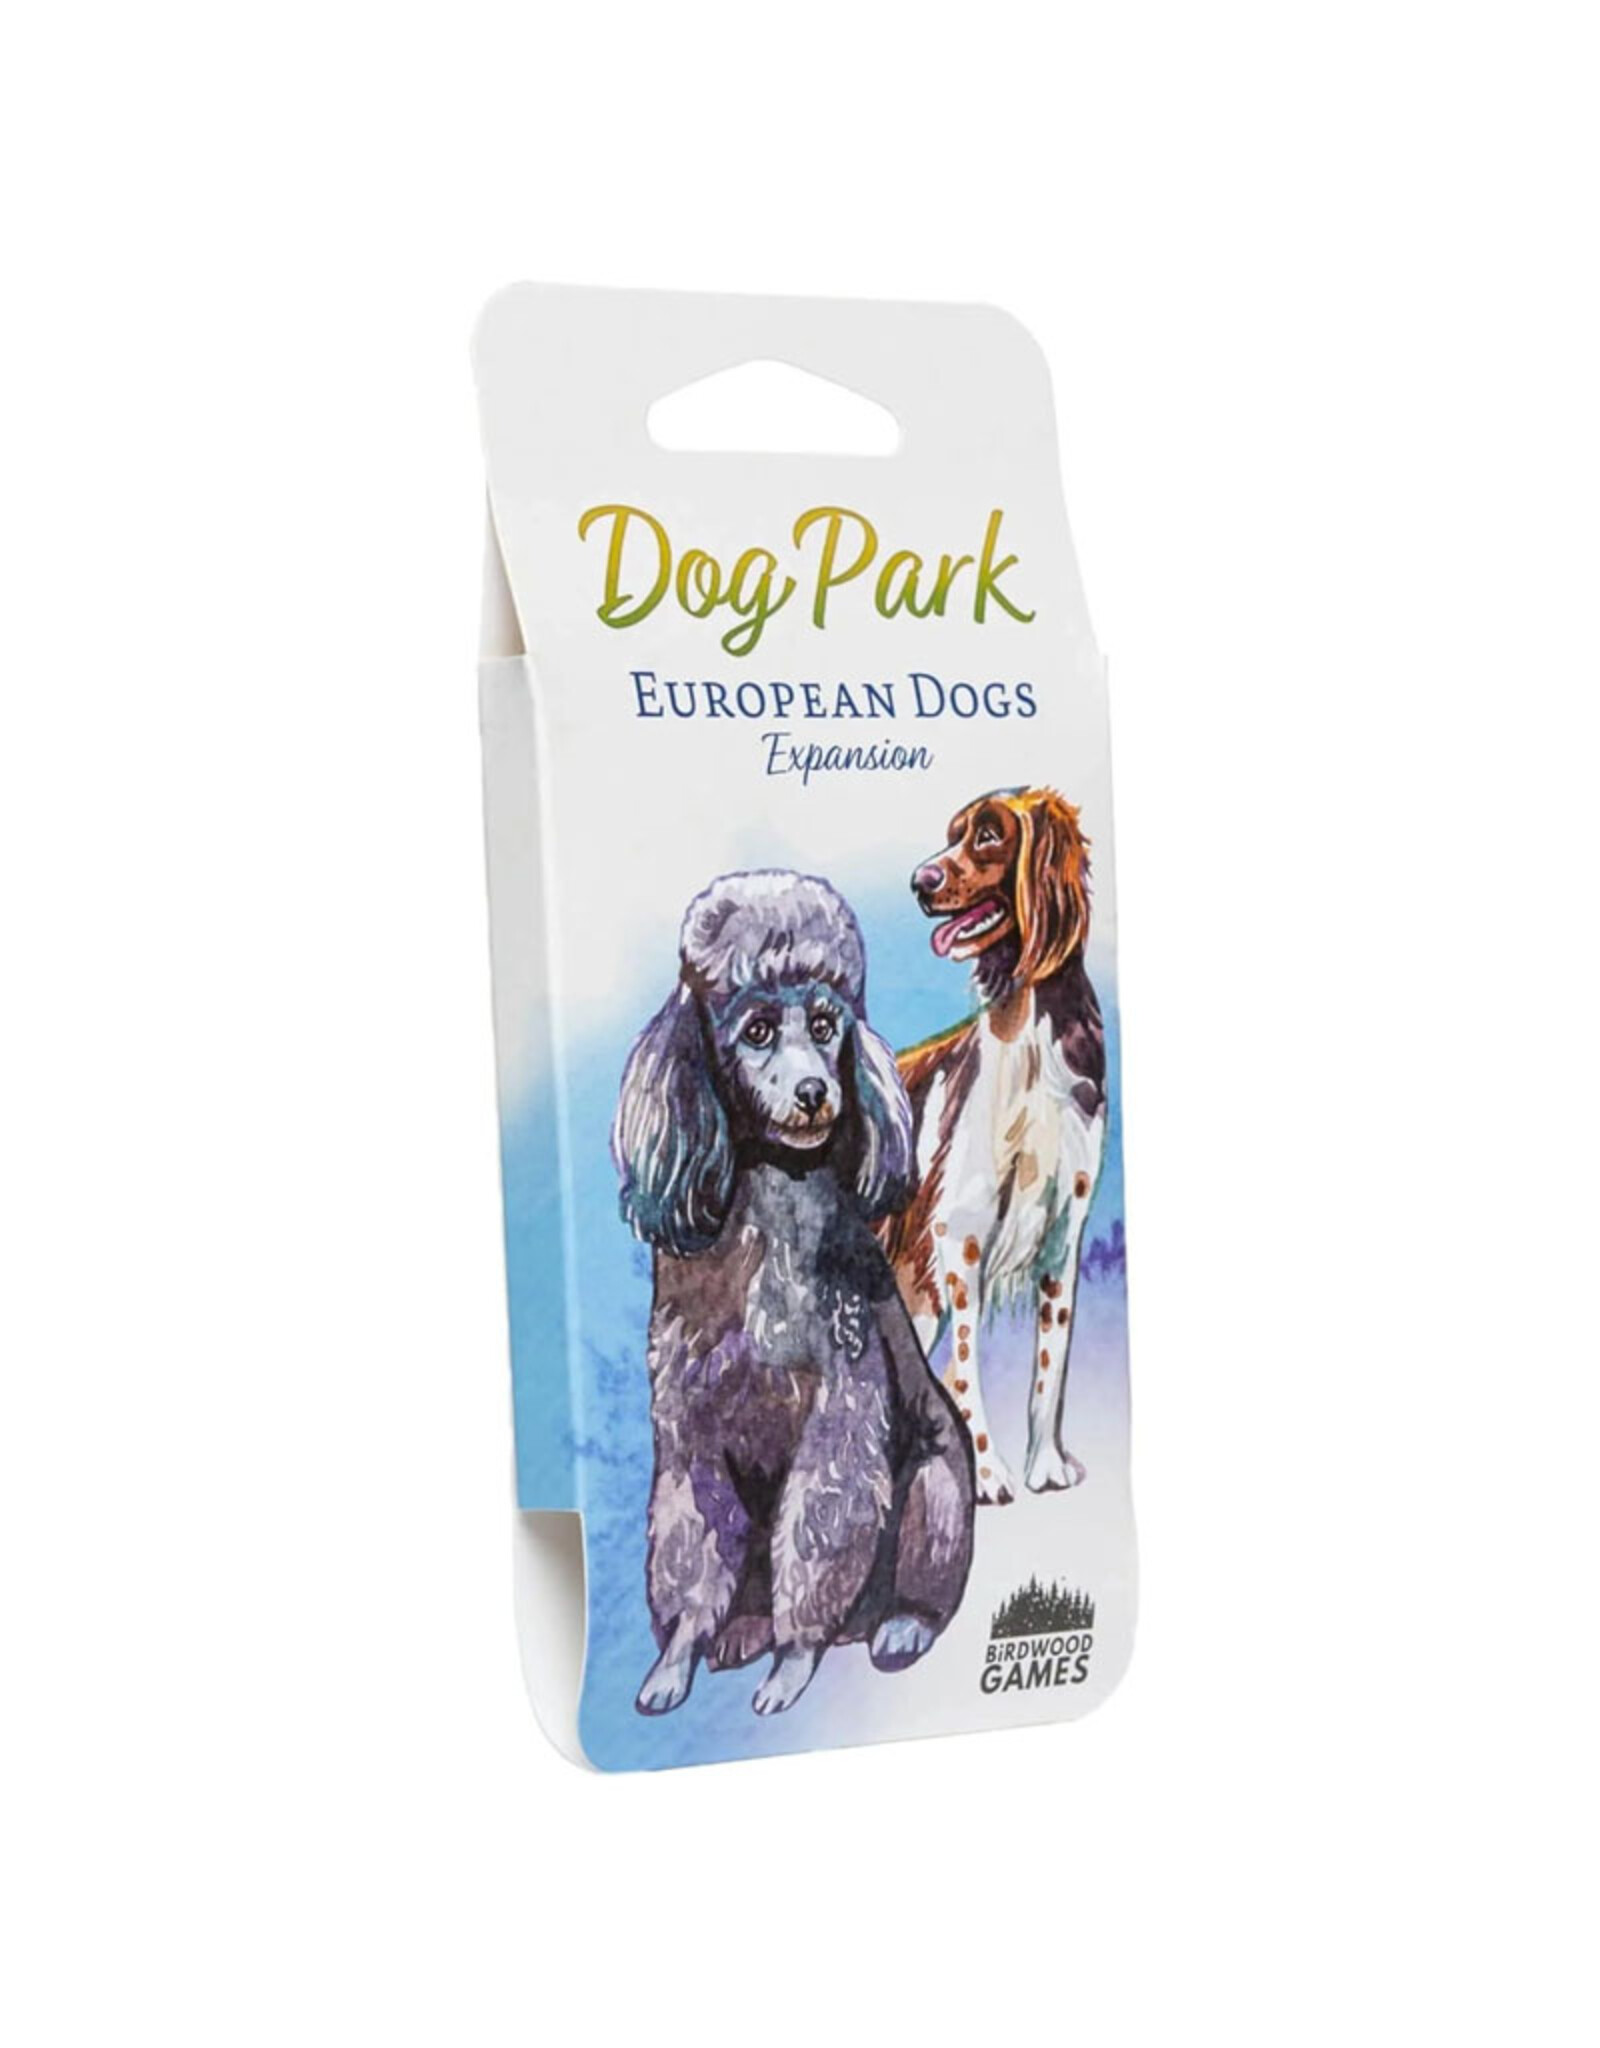 Birdwood Games Dog Park Expansion: European Dogs